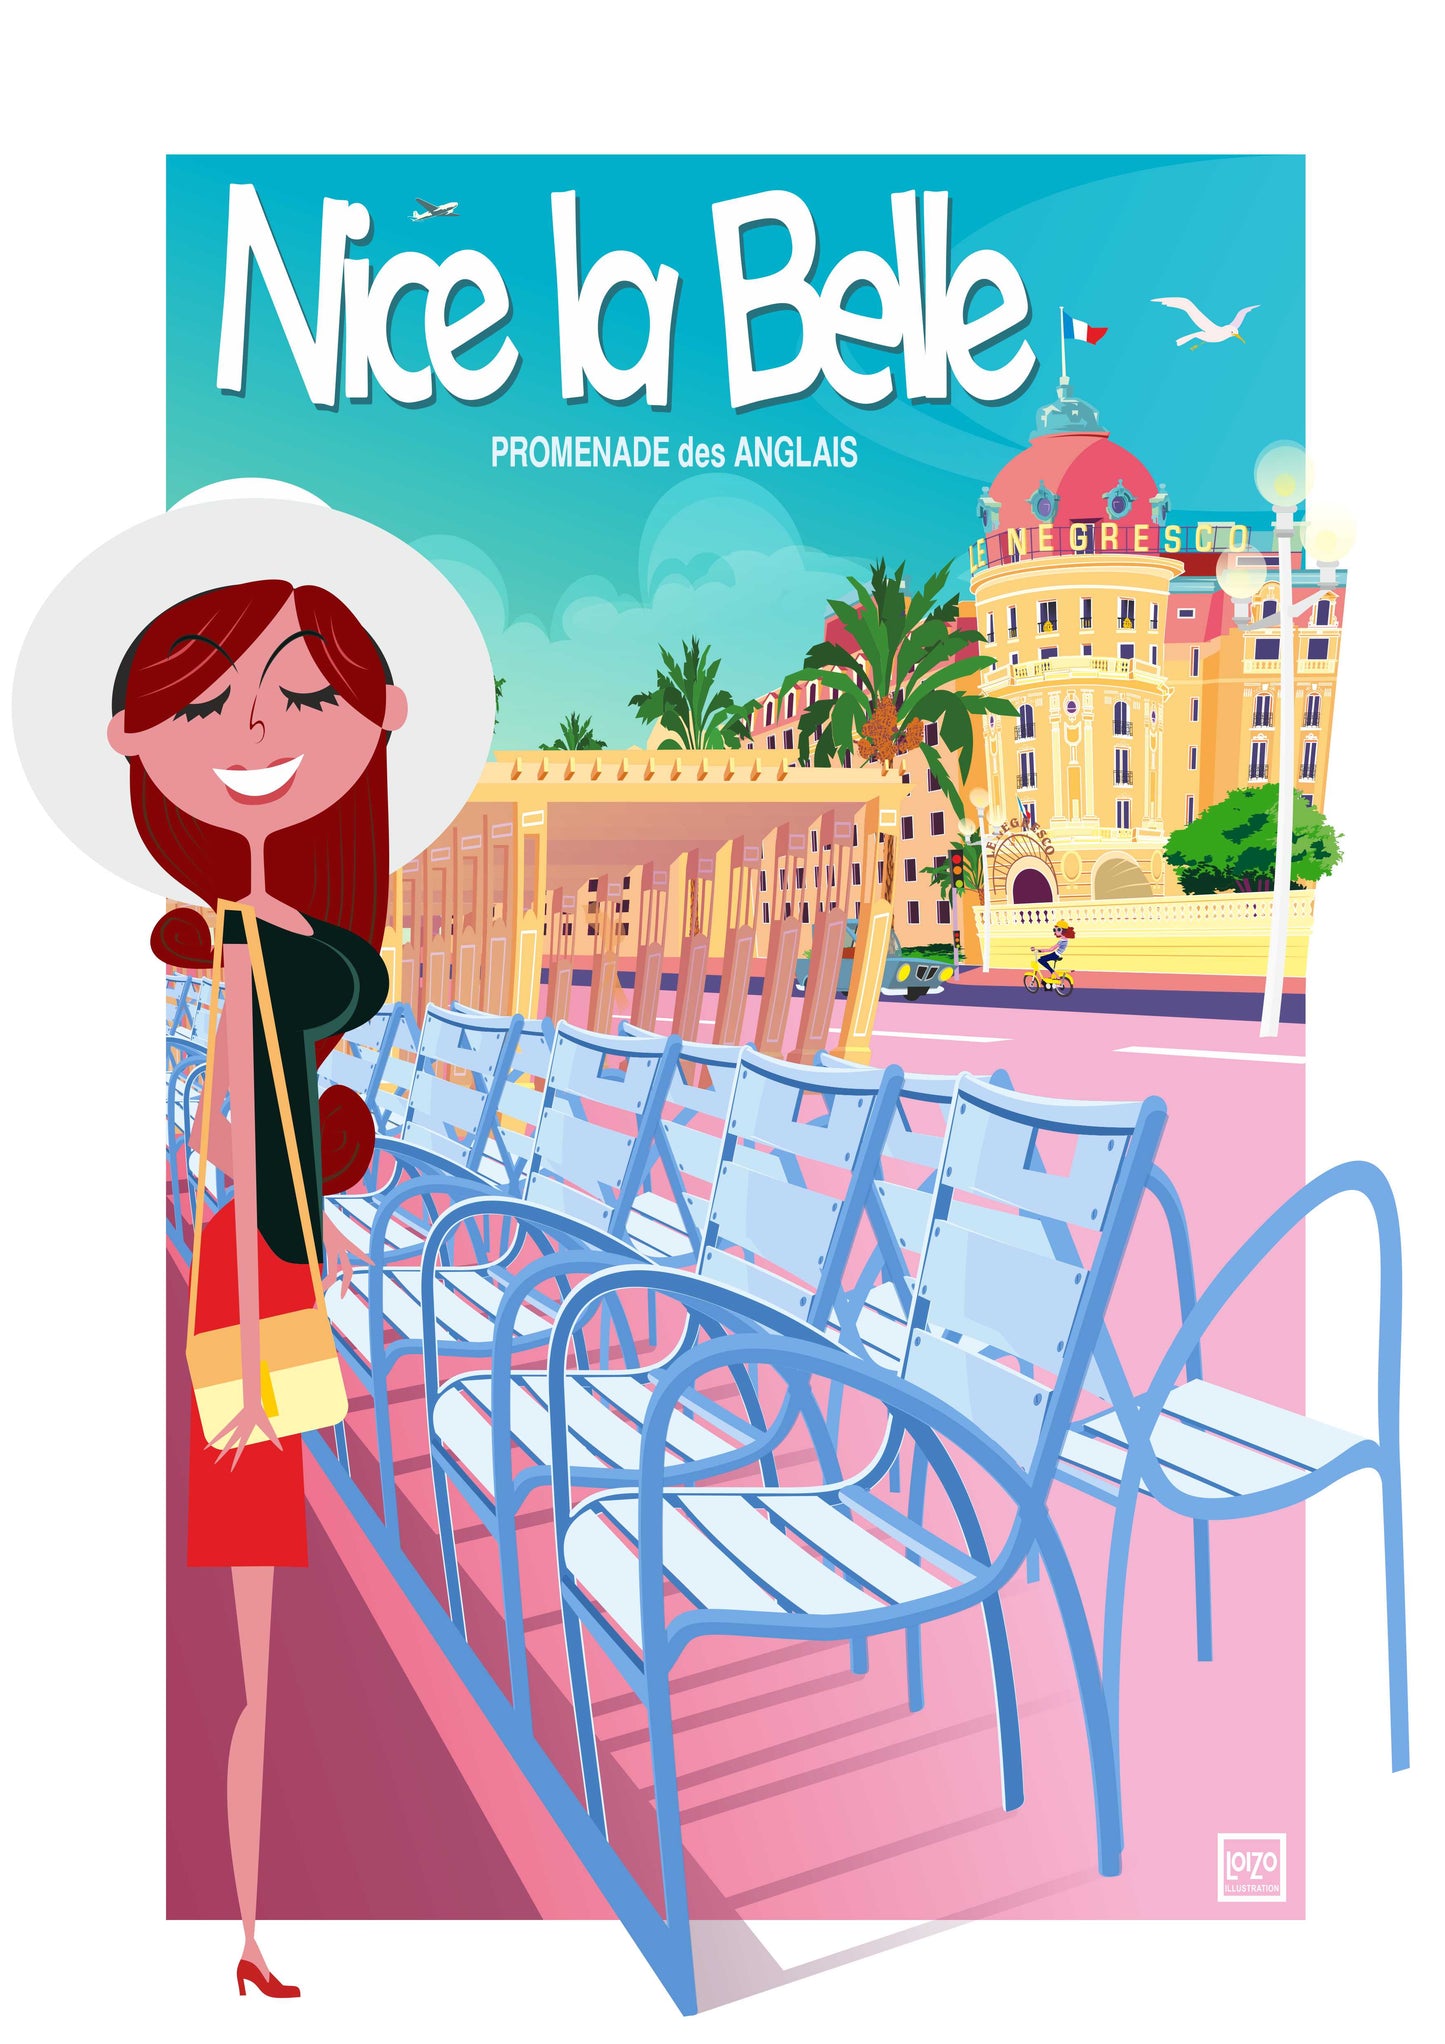 Nice la Belle "Promenade des Anglais" CARTOON